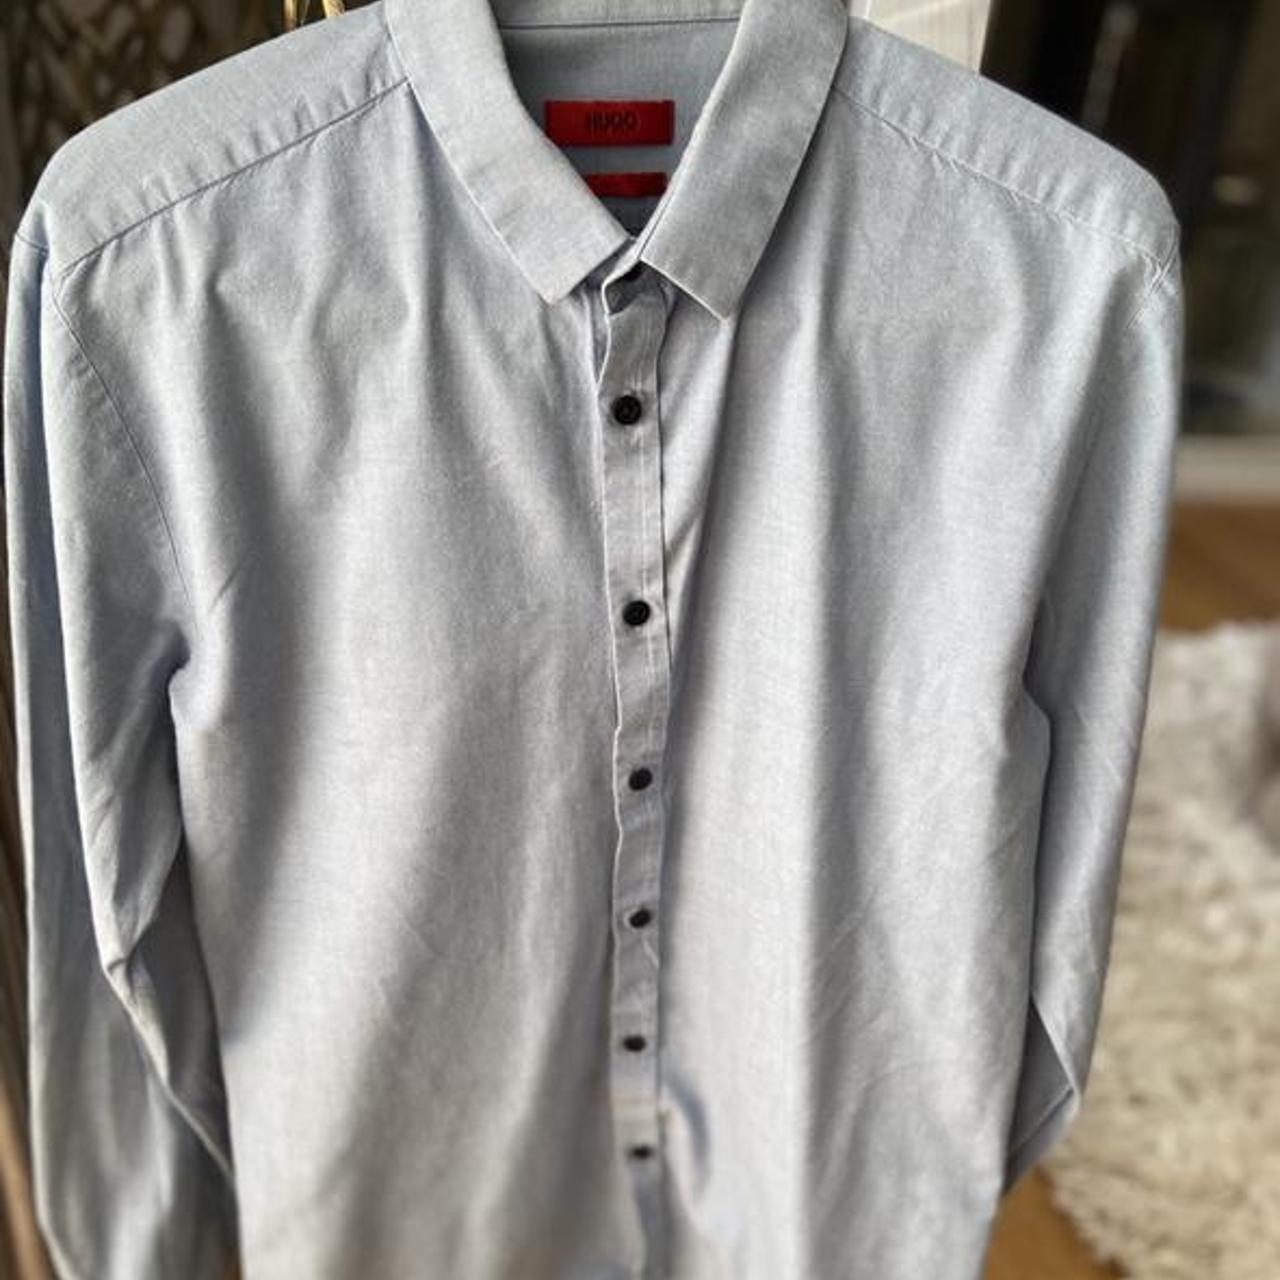 Hugo boss shirt size medium - Depop